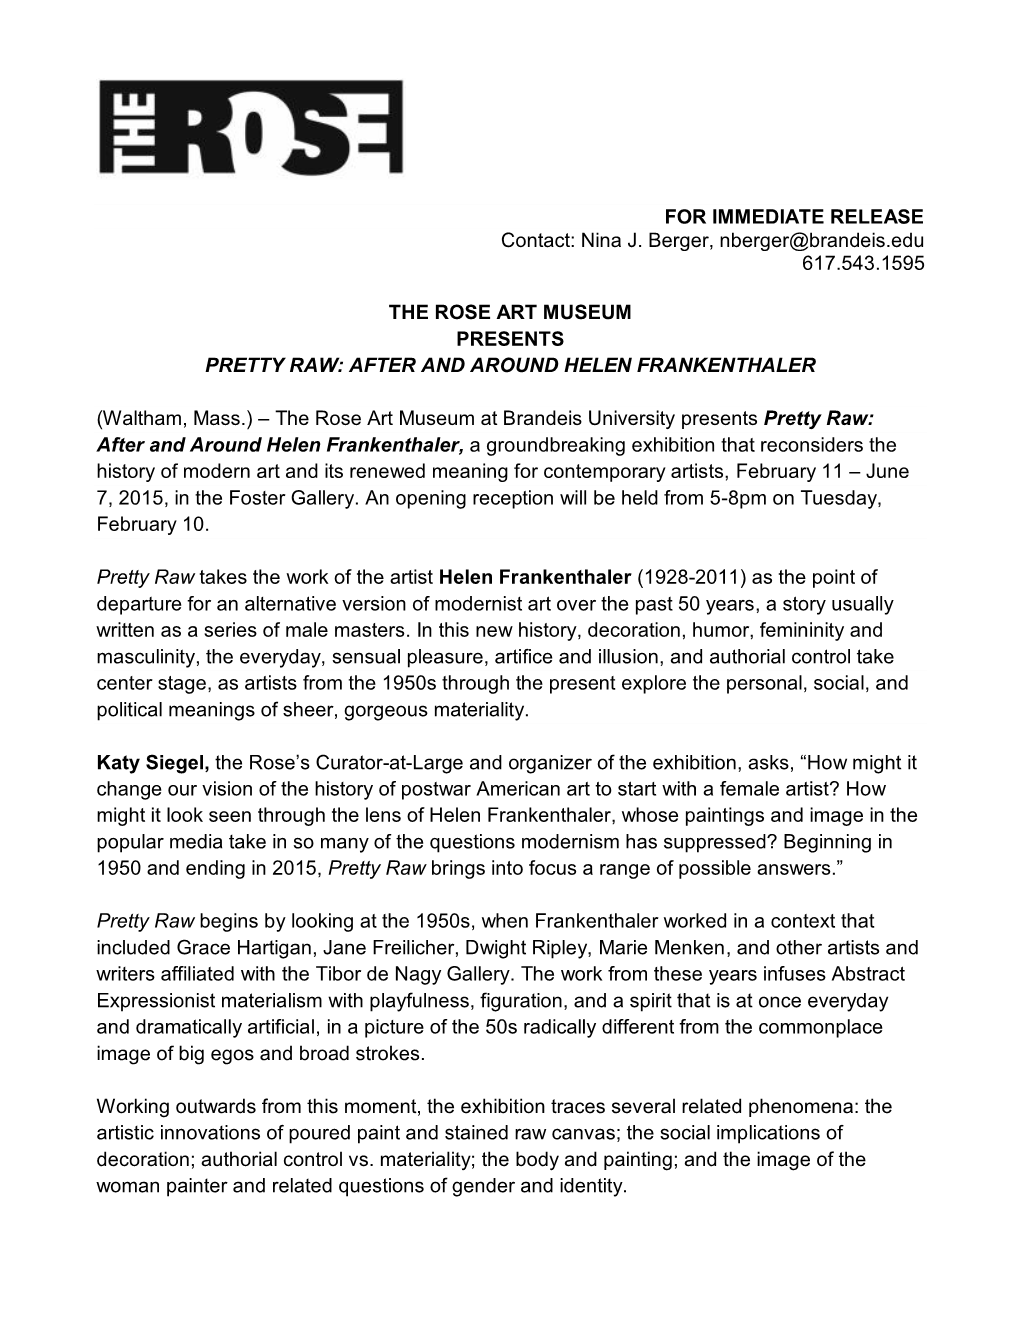 Pretty Raw: After and Around Helen Frankenthaler